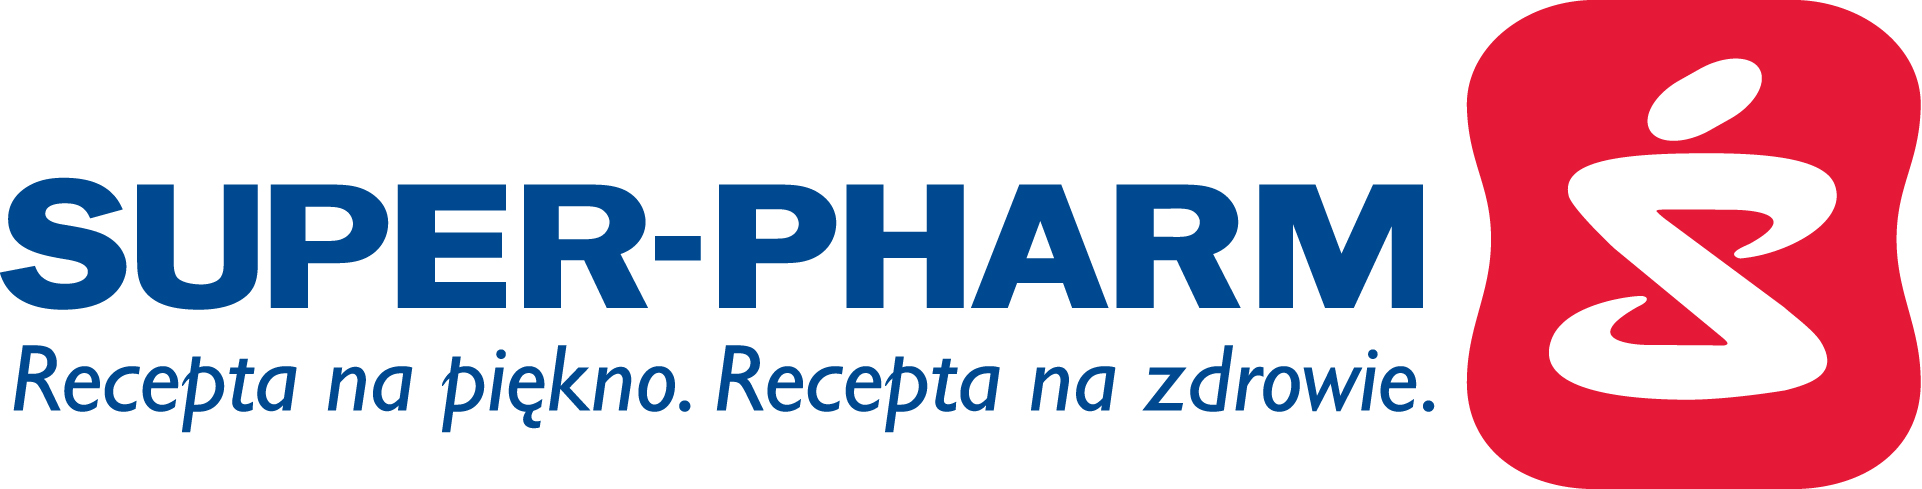 SuperPharm Logo NOWE 2012_2_CMYK